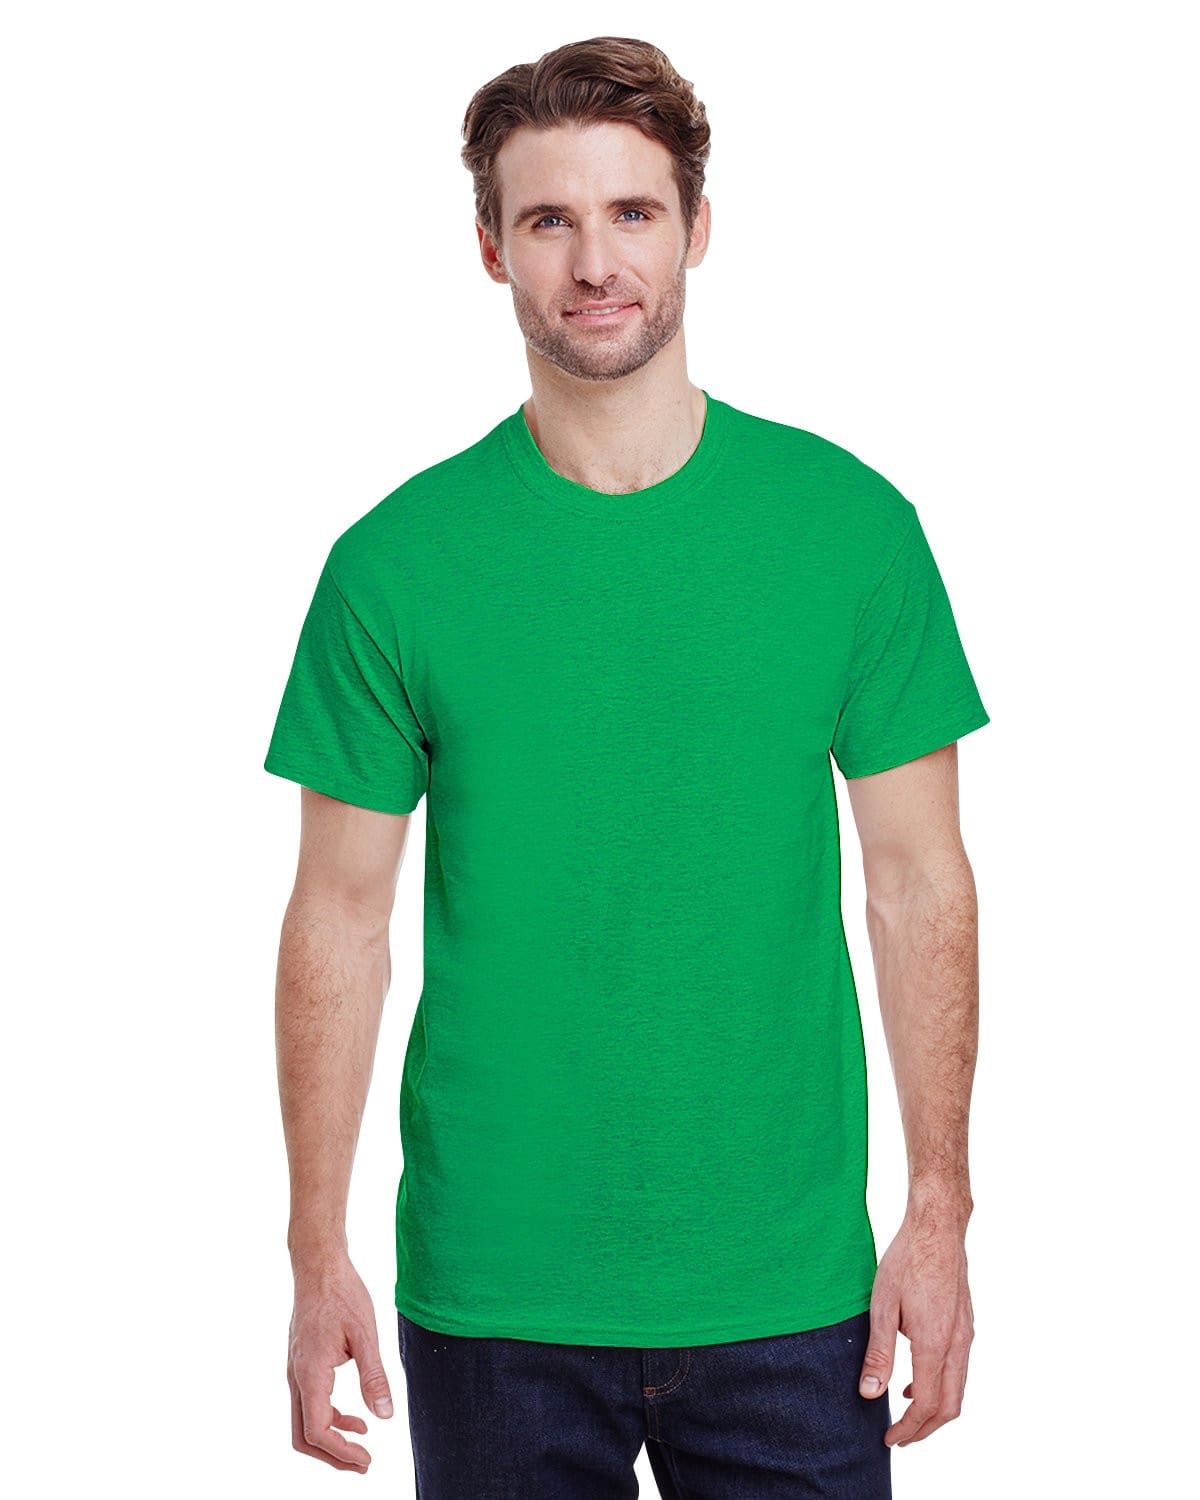 g500-adult-heavy-cotton-5-3oz-t-shirt-small-Small-ANTIQ IRISH GRN-Oasispromos